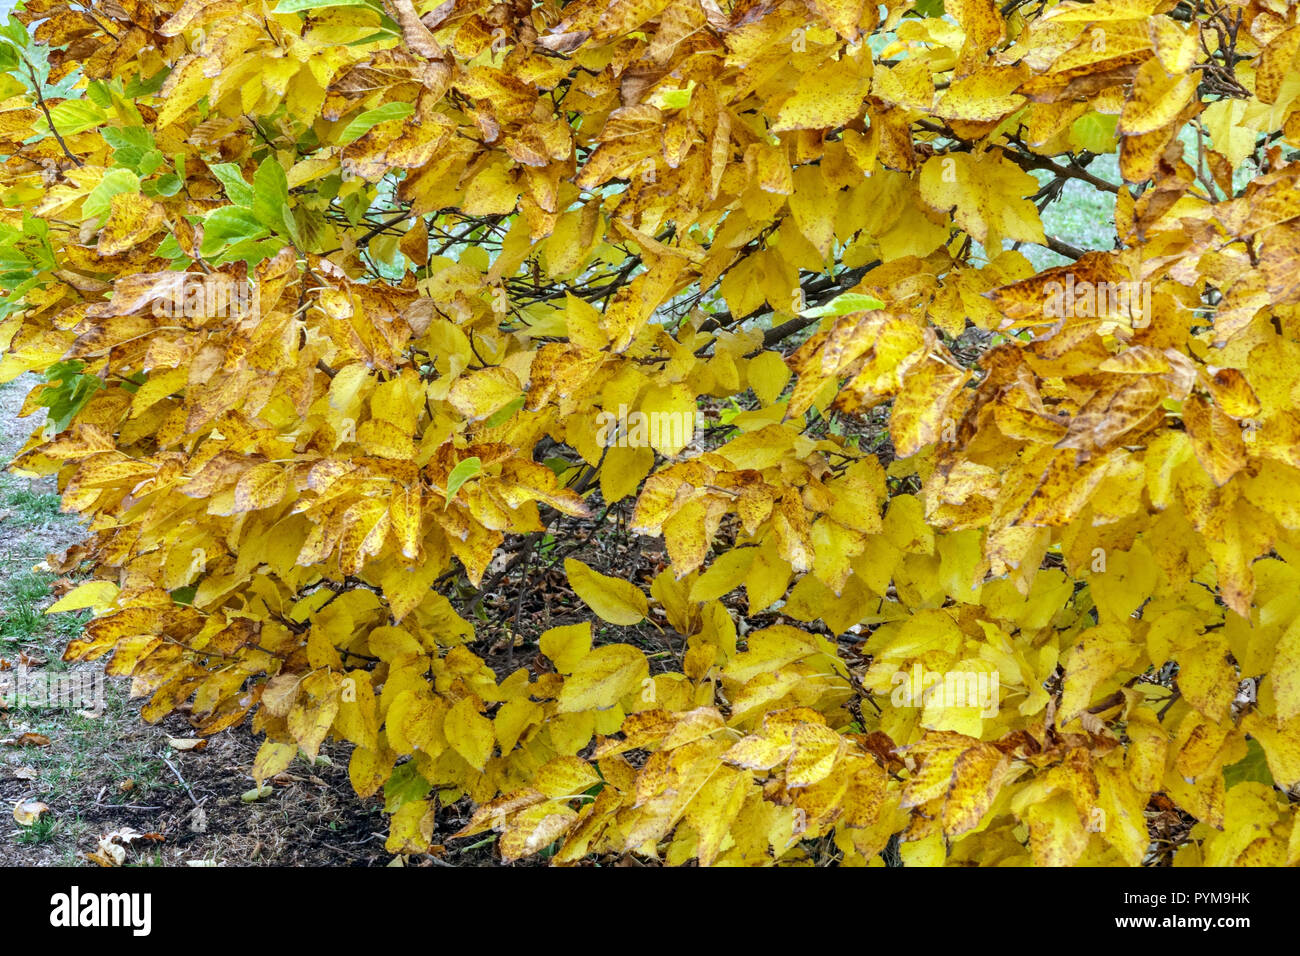 White Mulberry, Morus alba "Nana" in autumn leaves colors Stock Photo